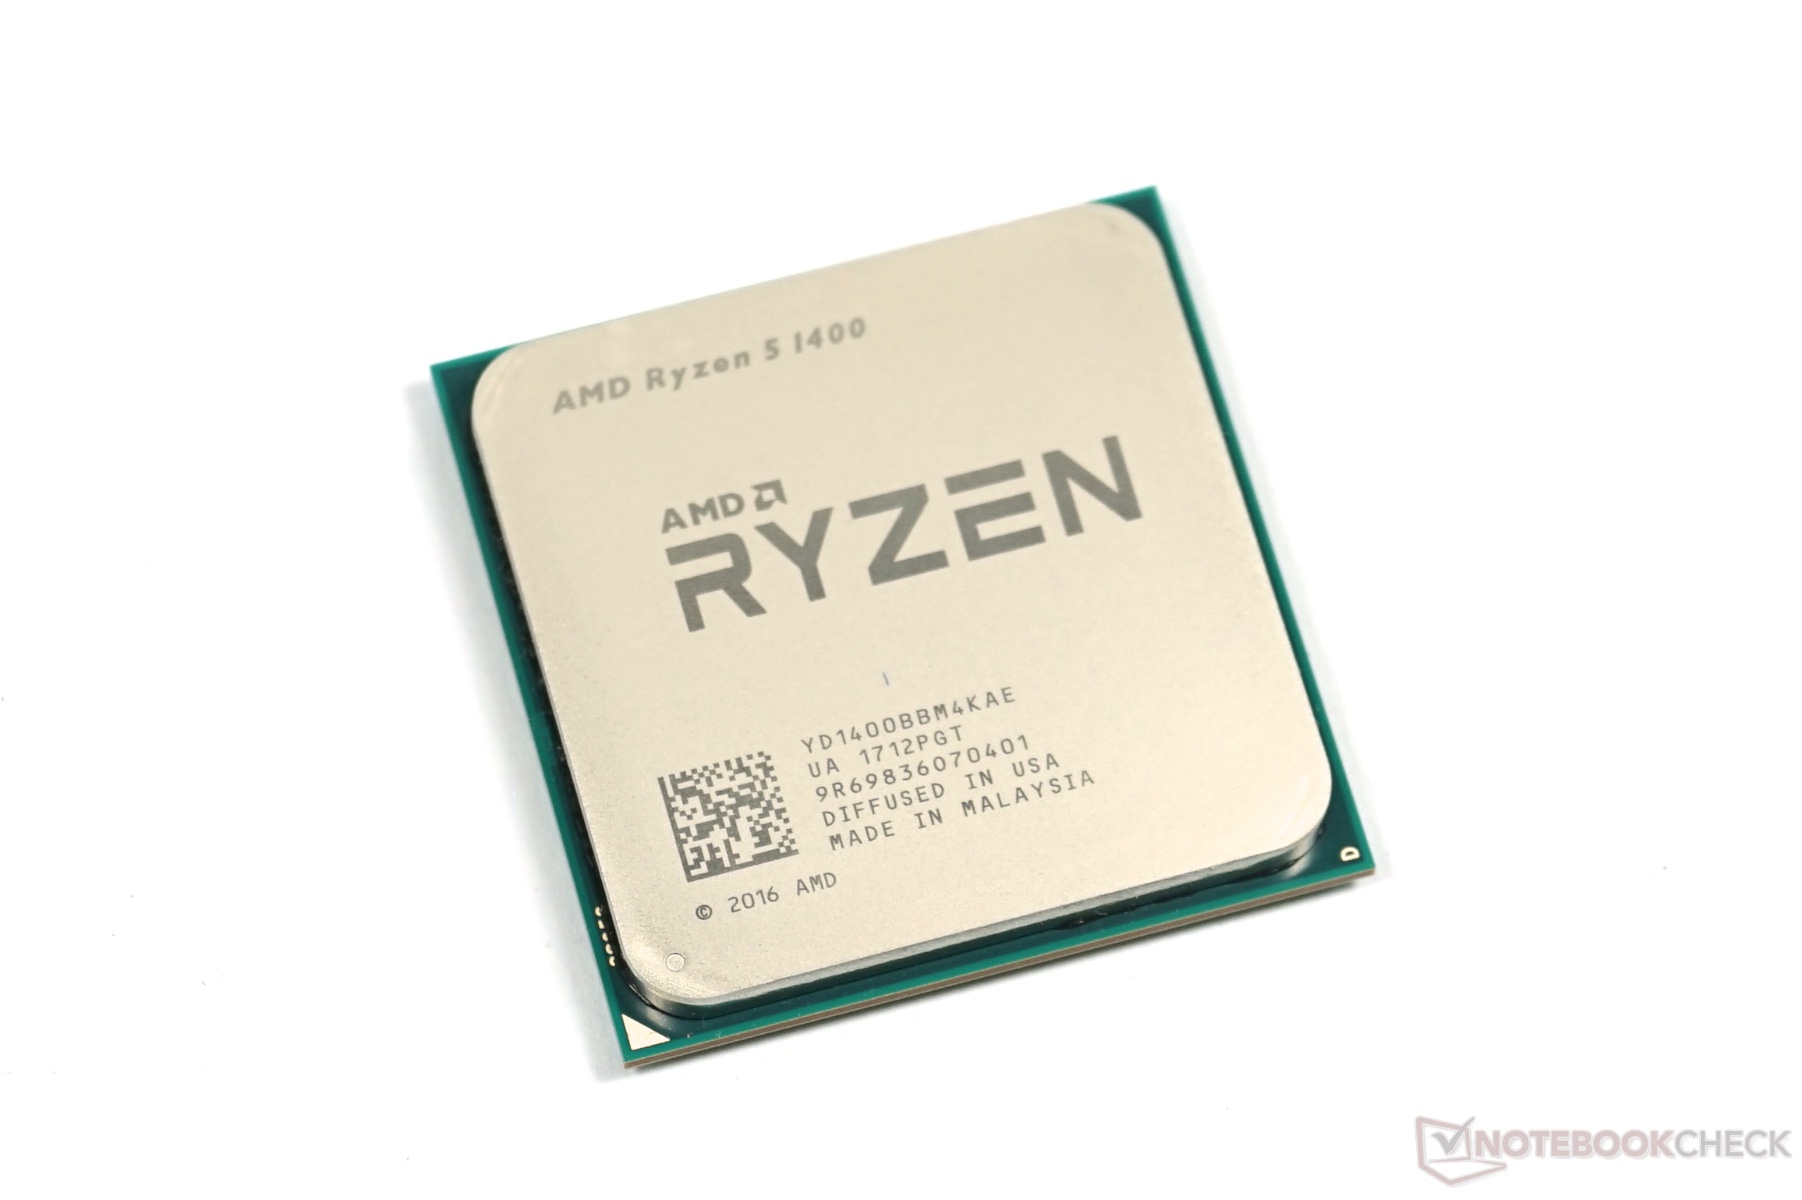 Amd radeon r5 процессоры. AMD Ryzen 3 1200. Процессор АМД райзен 3 1200. AMD 5 2500. Процессор AMD Ryzen 5.